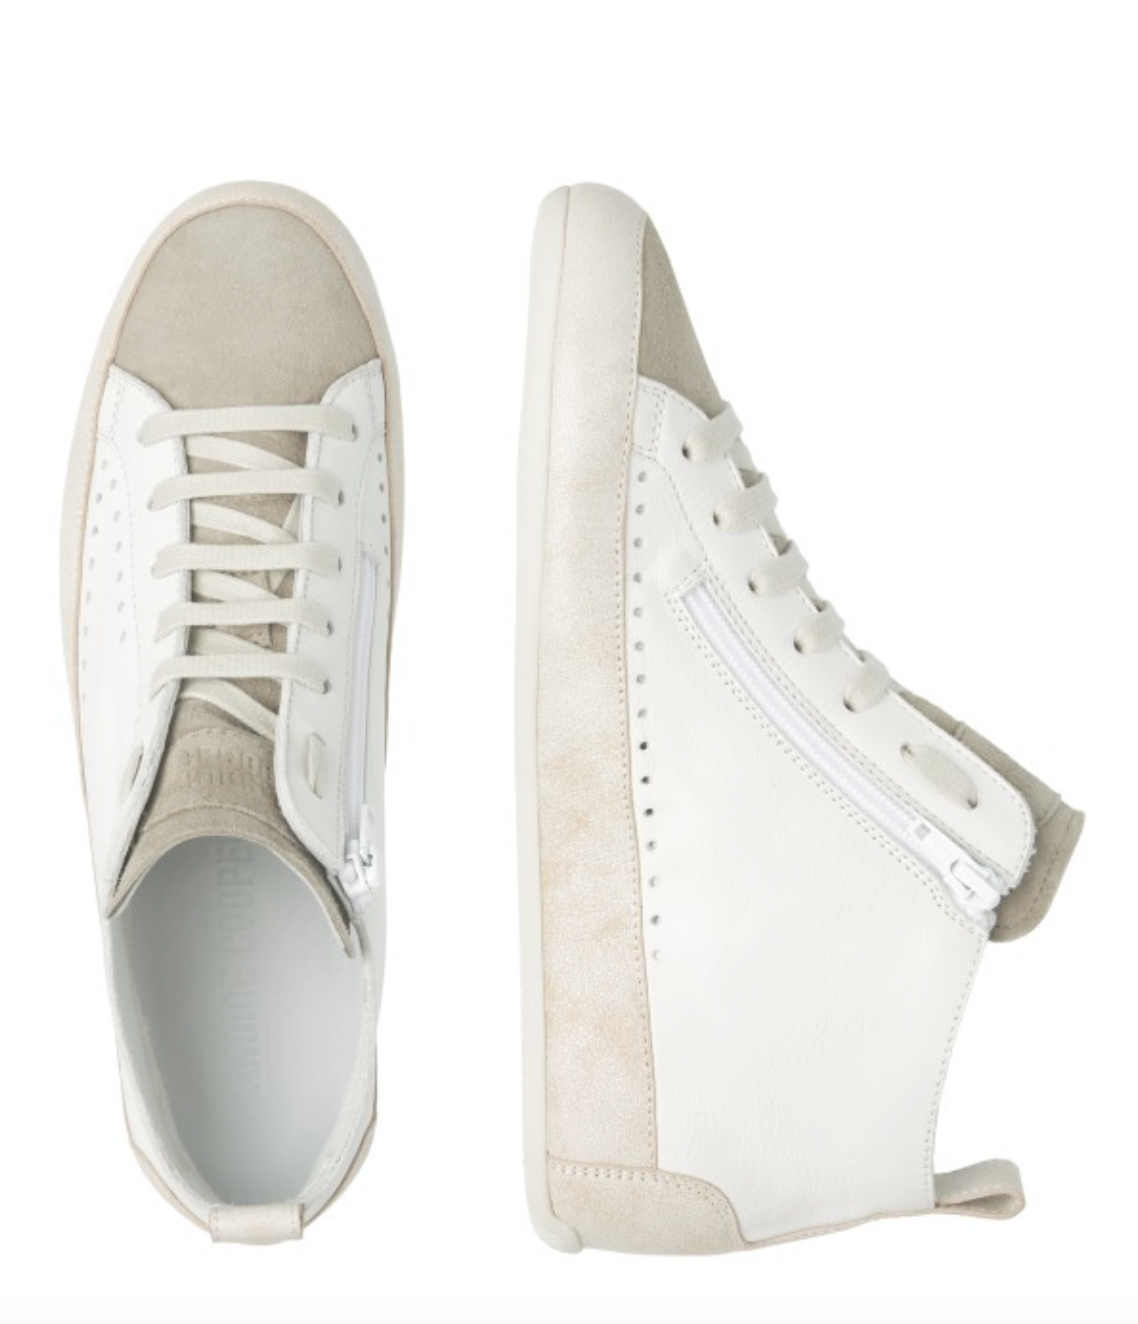 Hetre Alresford Hampshire Shoe Store Candice Cooper White Grey Mid Dafne Sneaker